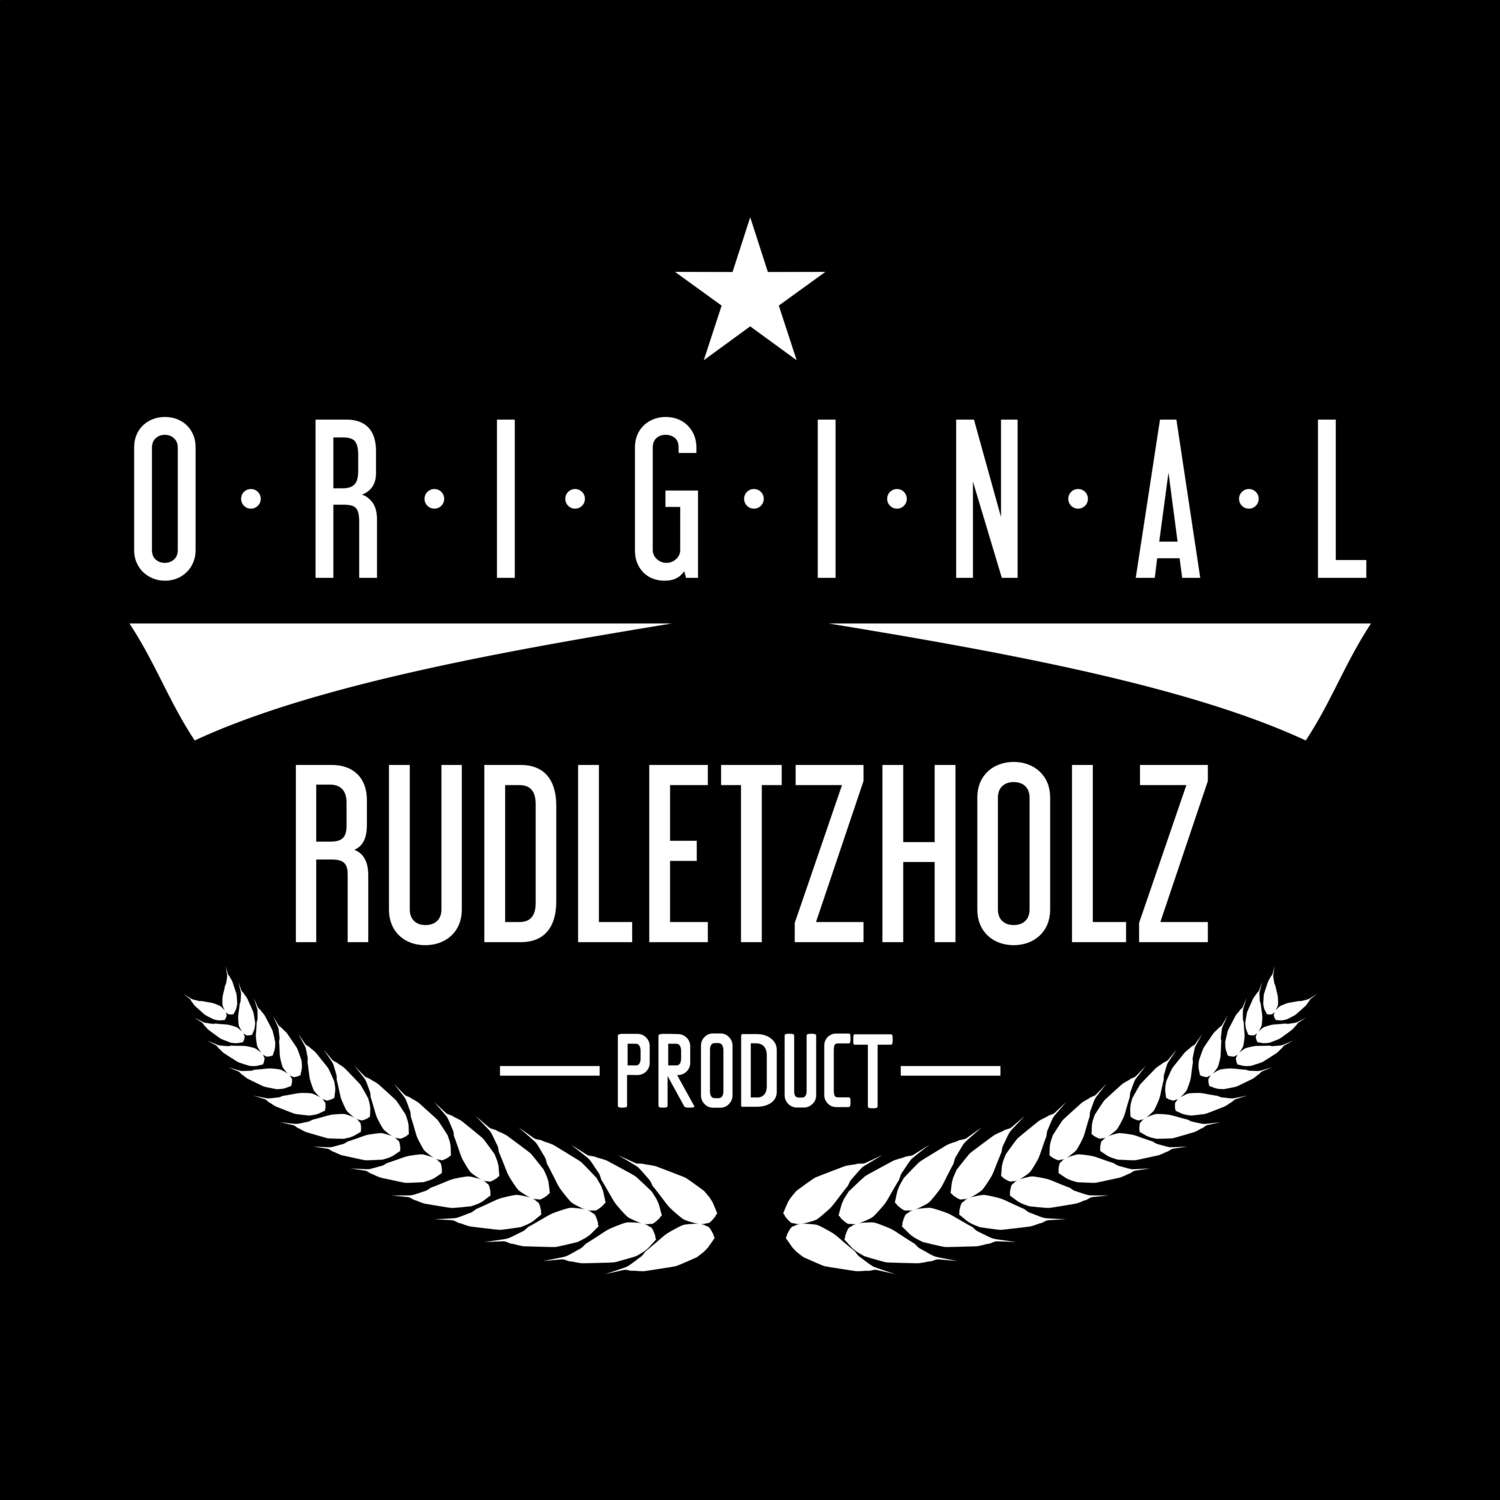 Rudletzholz T-Shirt »Original Product«